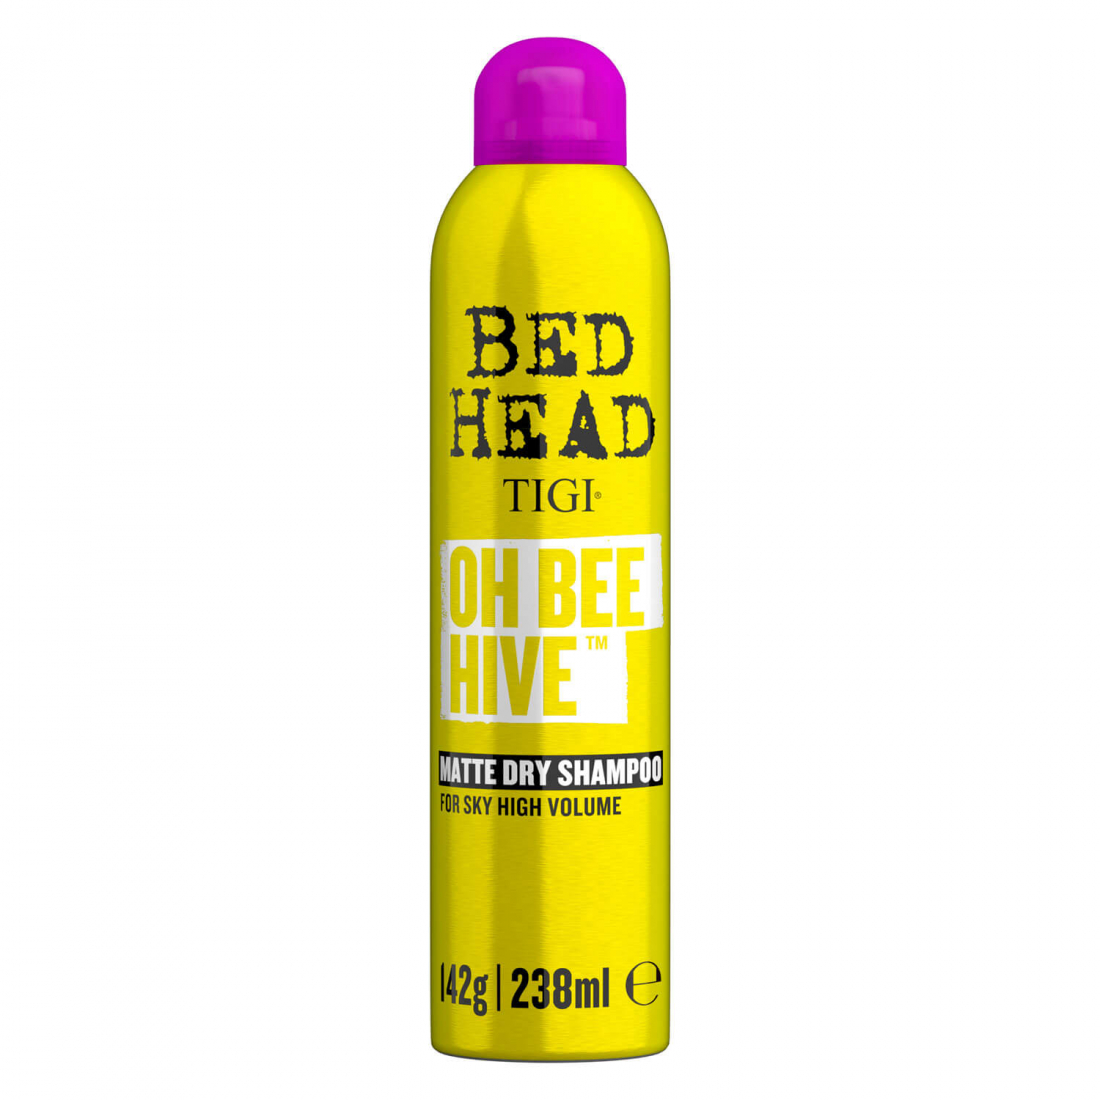 'Bed Head Oh Bee Hive' Dry Shampoo - 238 ml